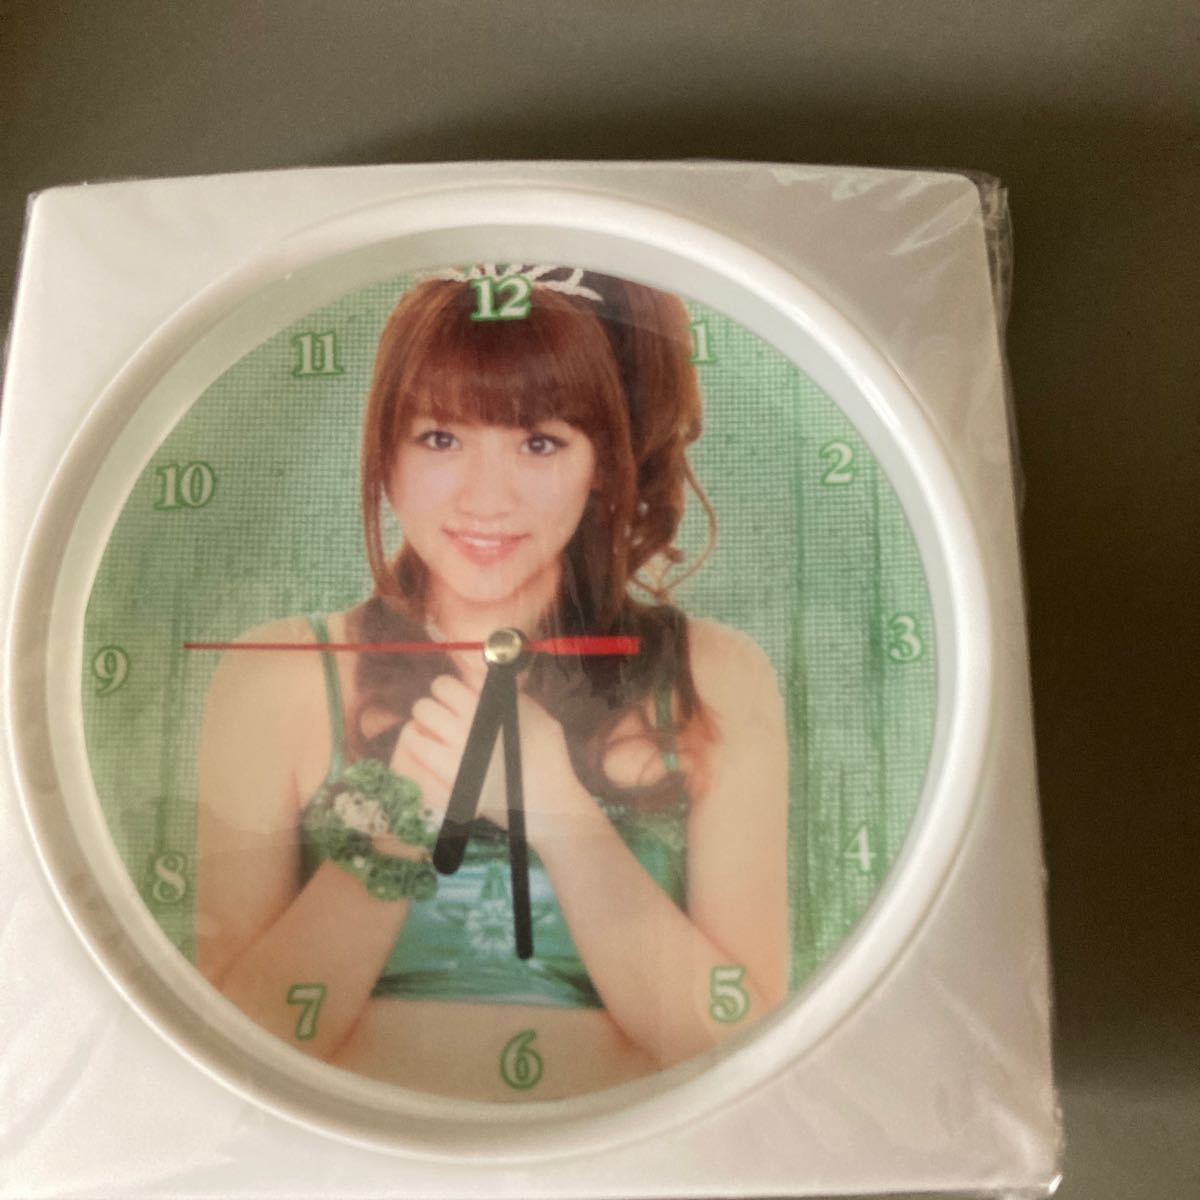 AKB48 の写真集と高橋みなみの掛け時計と大きなラミネート加工写真